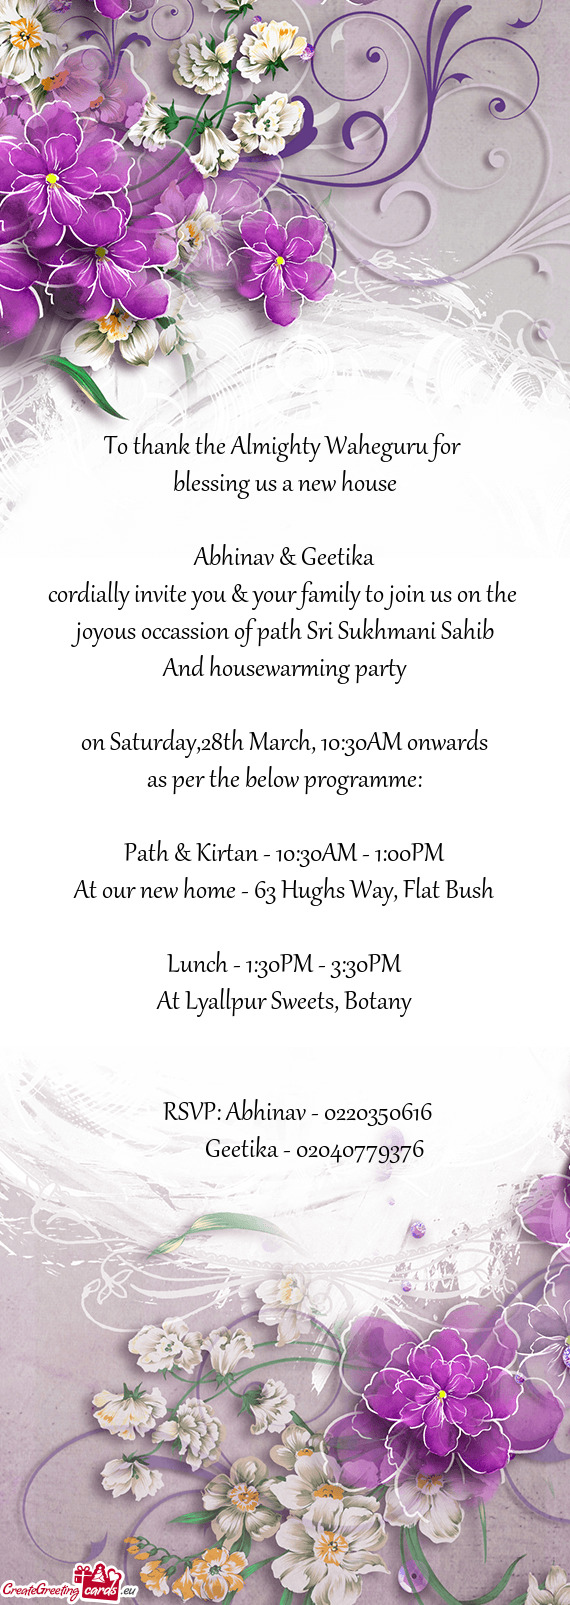 invitation for sukhmani sahib path